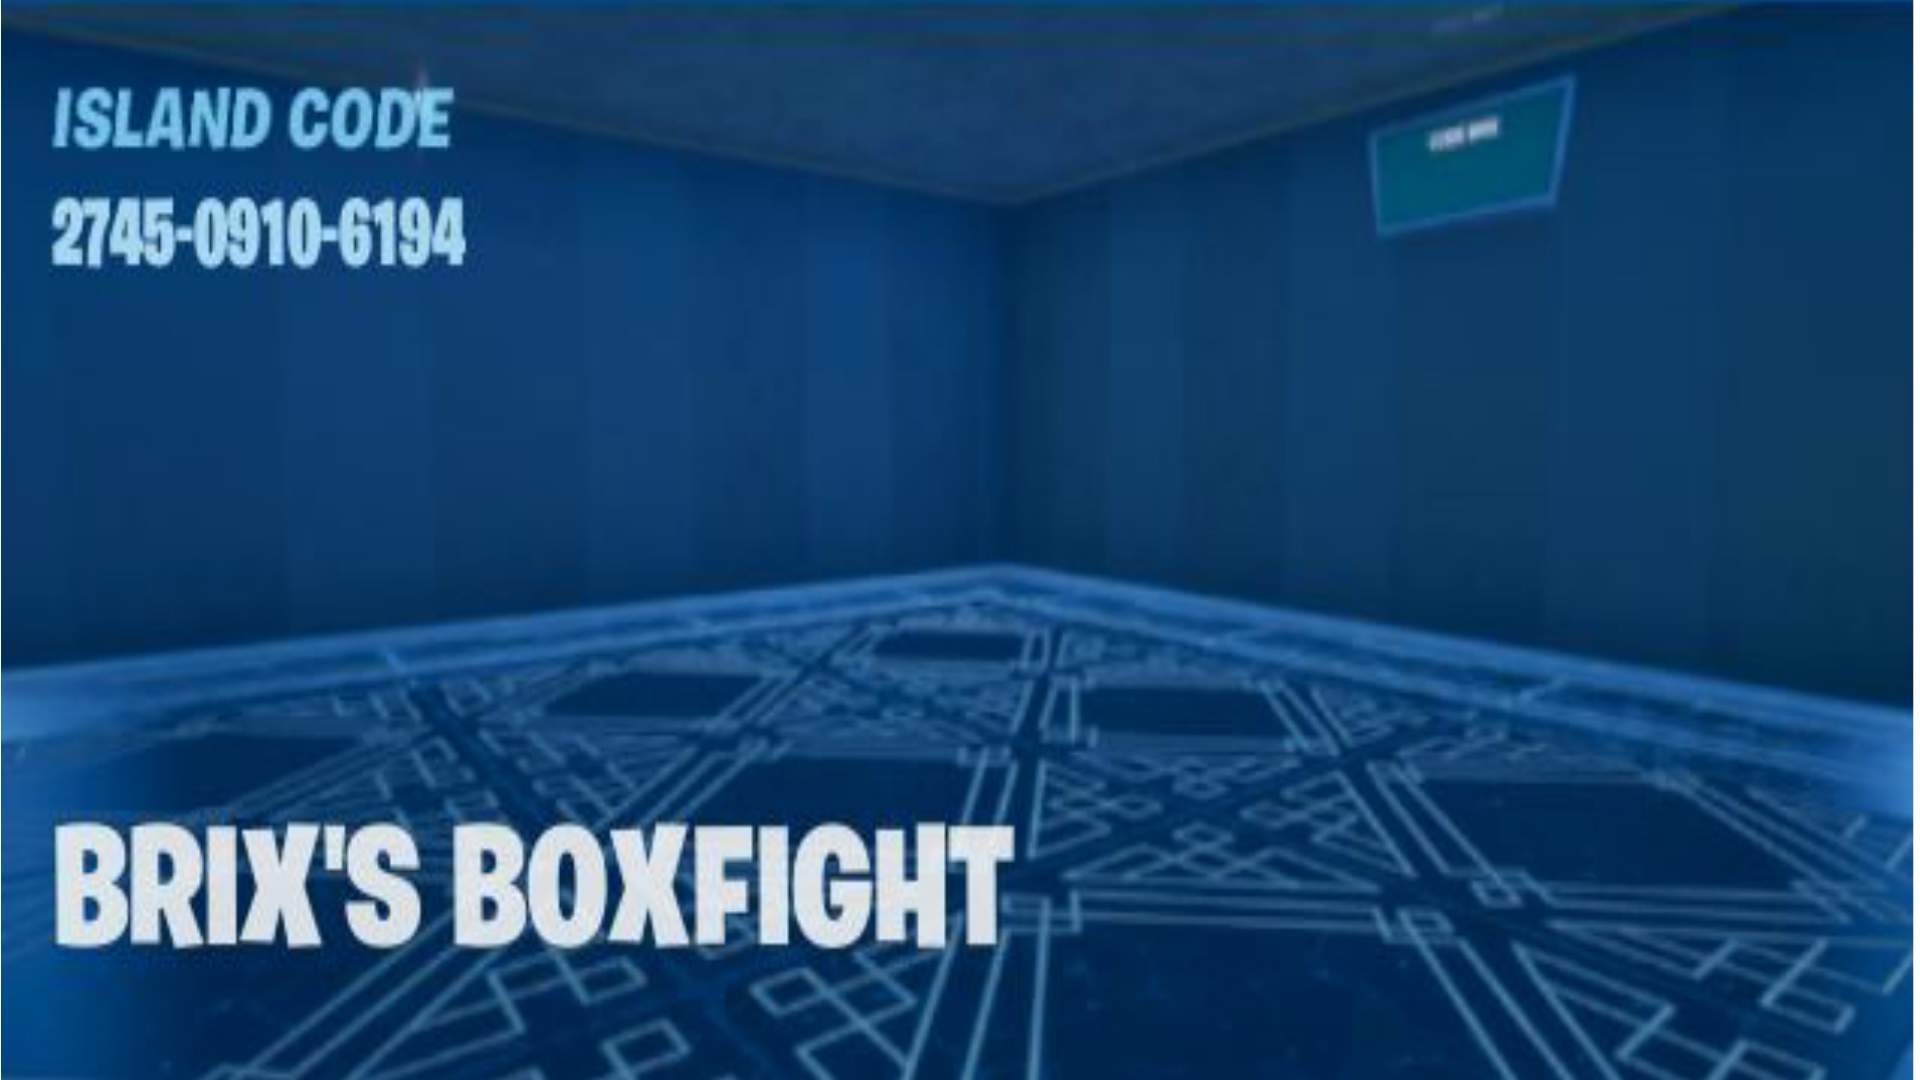 box fight code 1v1